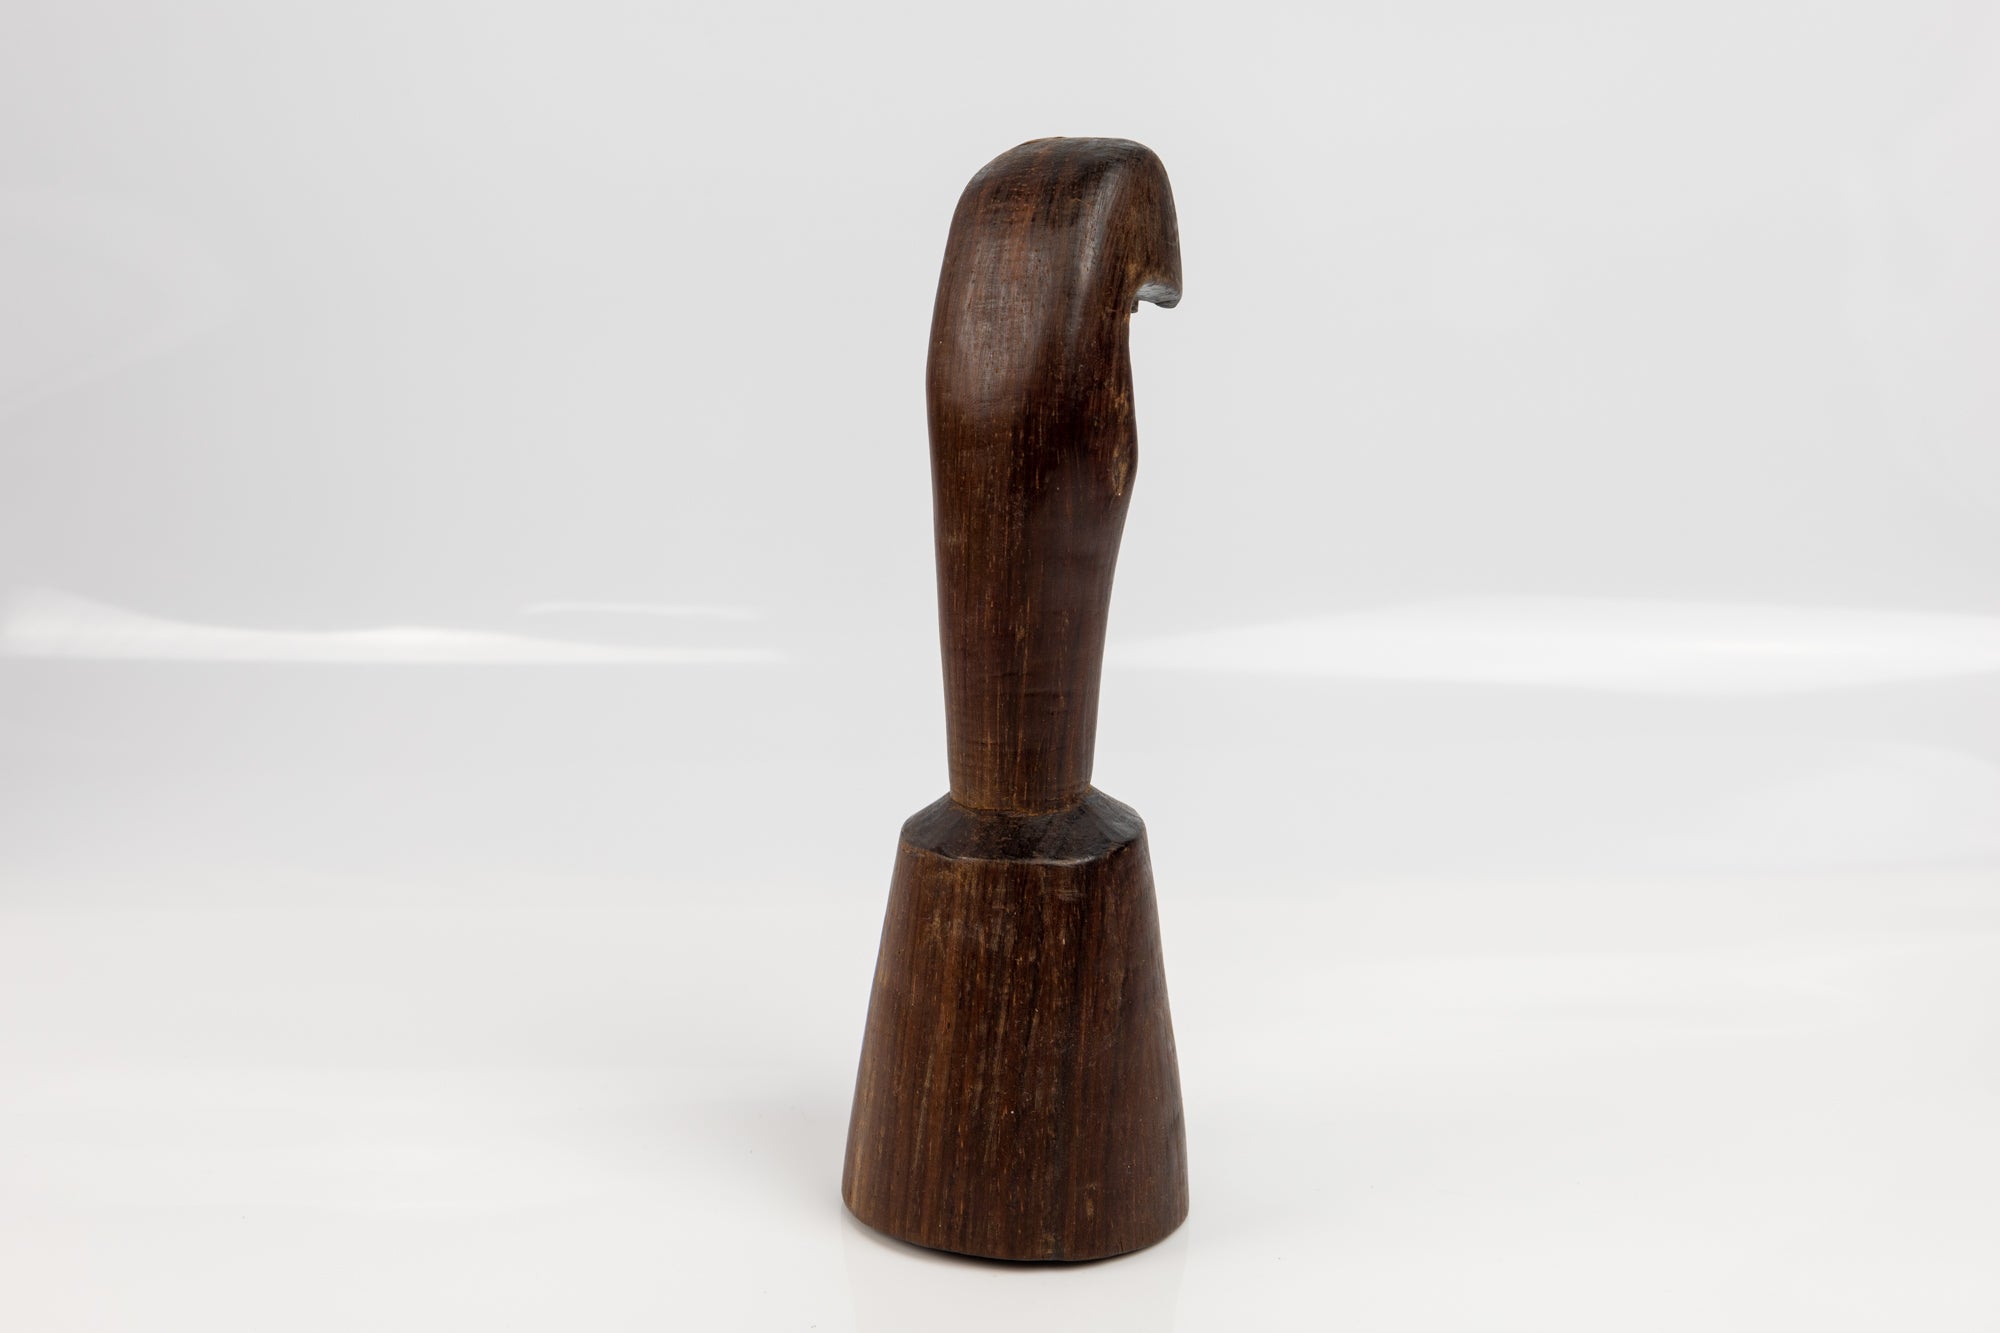 Grain Masher Figurine, Wood Carving